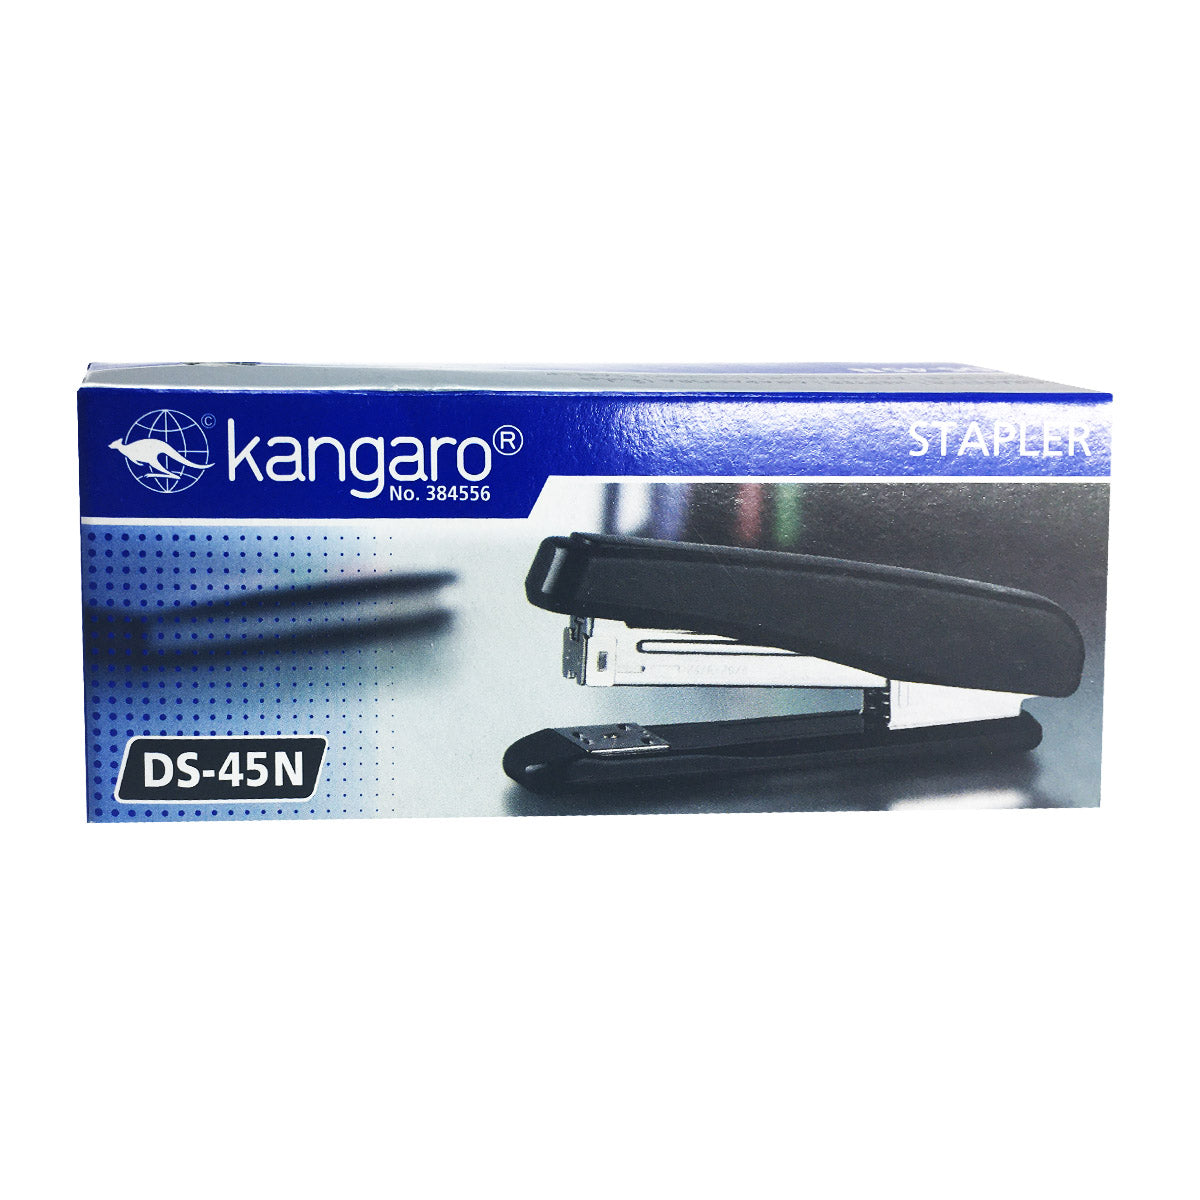 Kangaro DS-45N Stapler 30 Sheet Capacity